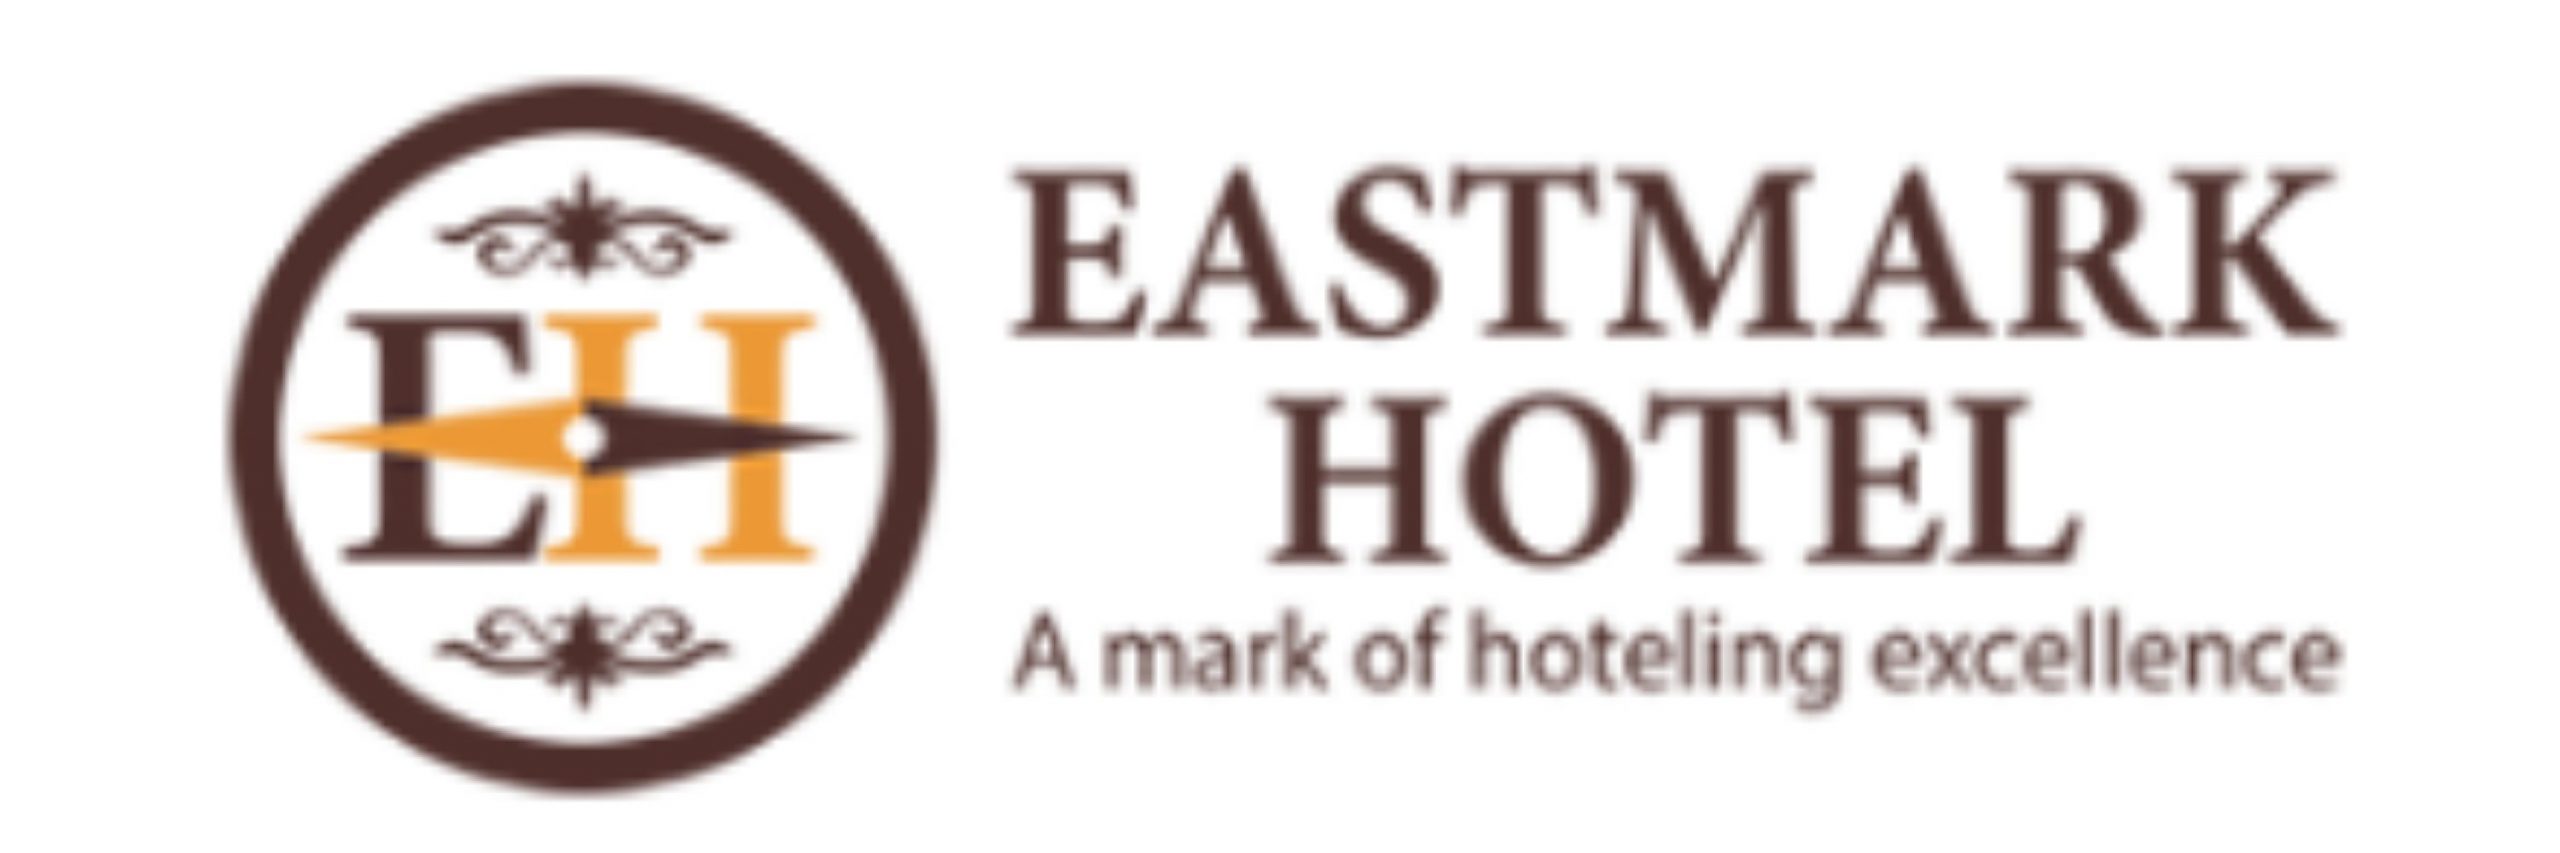 Eastmark Hotel |   wayne